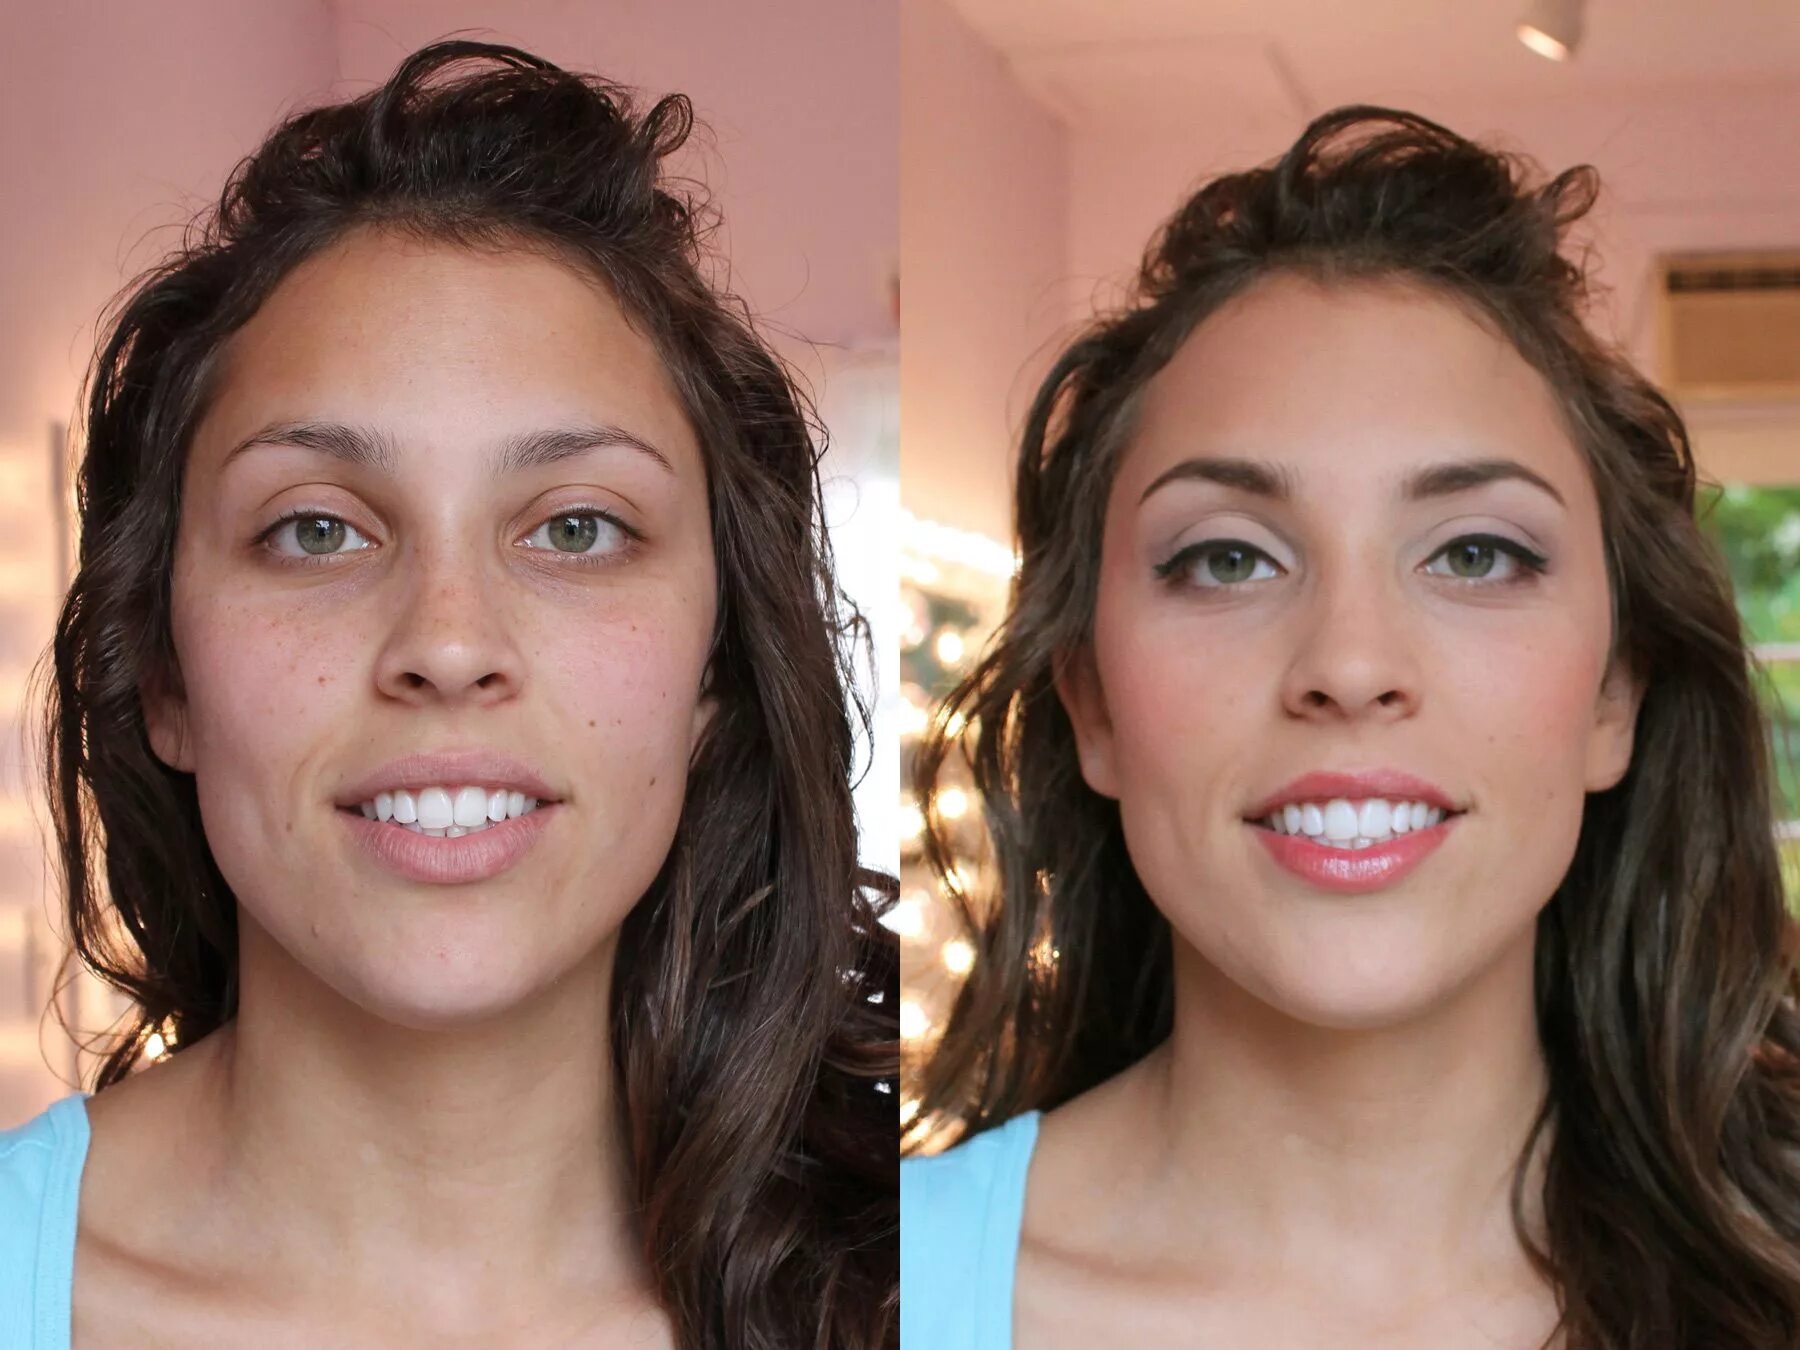 Photos before after. Before after. Стильный свадебный макияж. Airbrush Makeup до после. Facebuilding before and after.